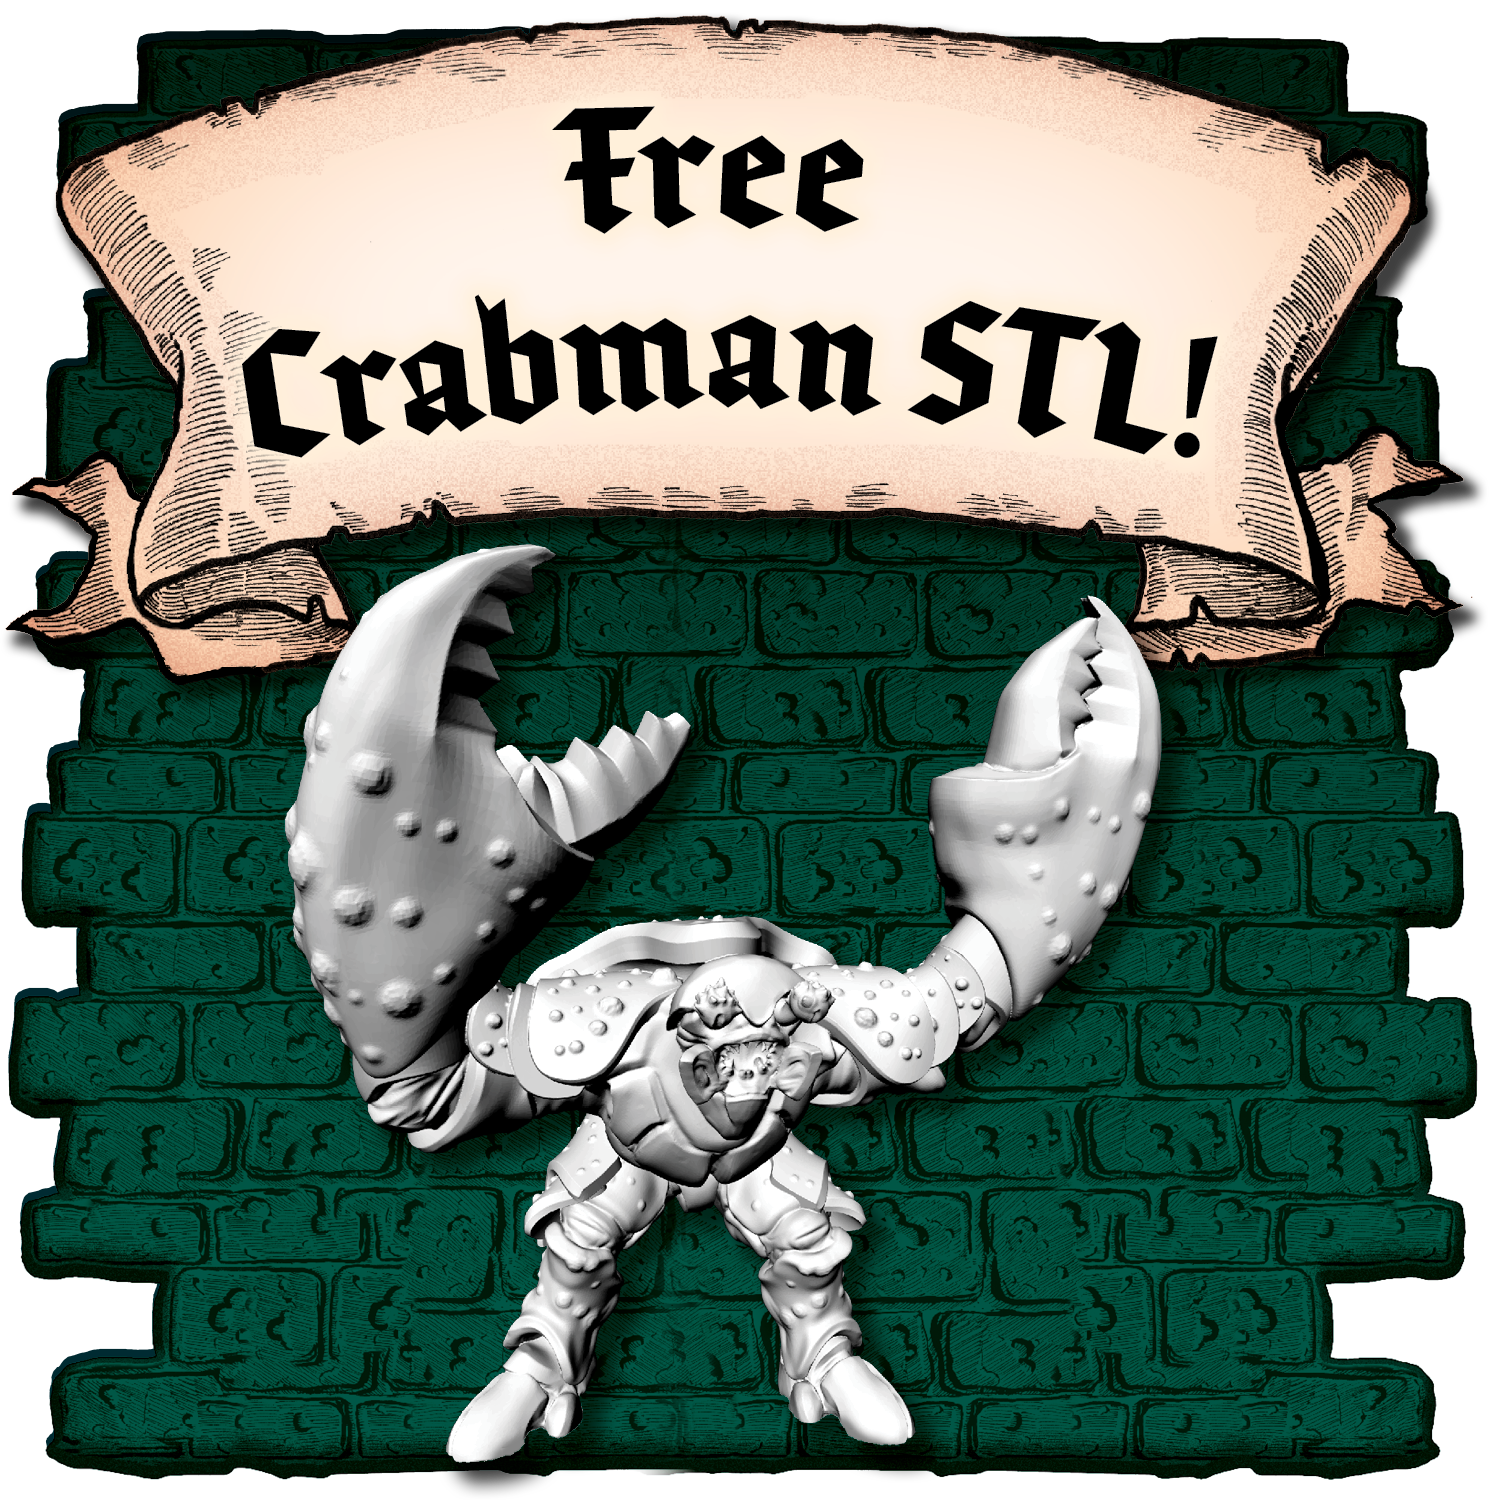 Foes 2 STL - Free Crabman